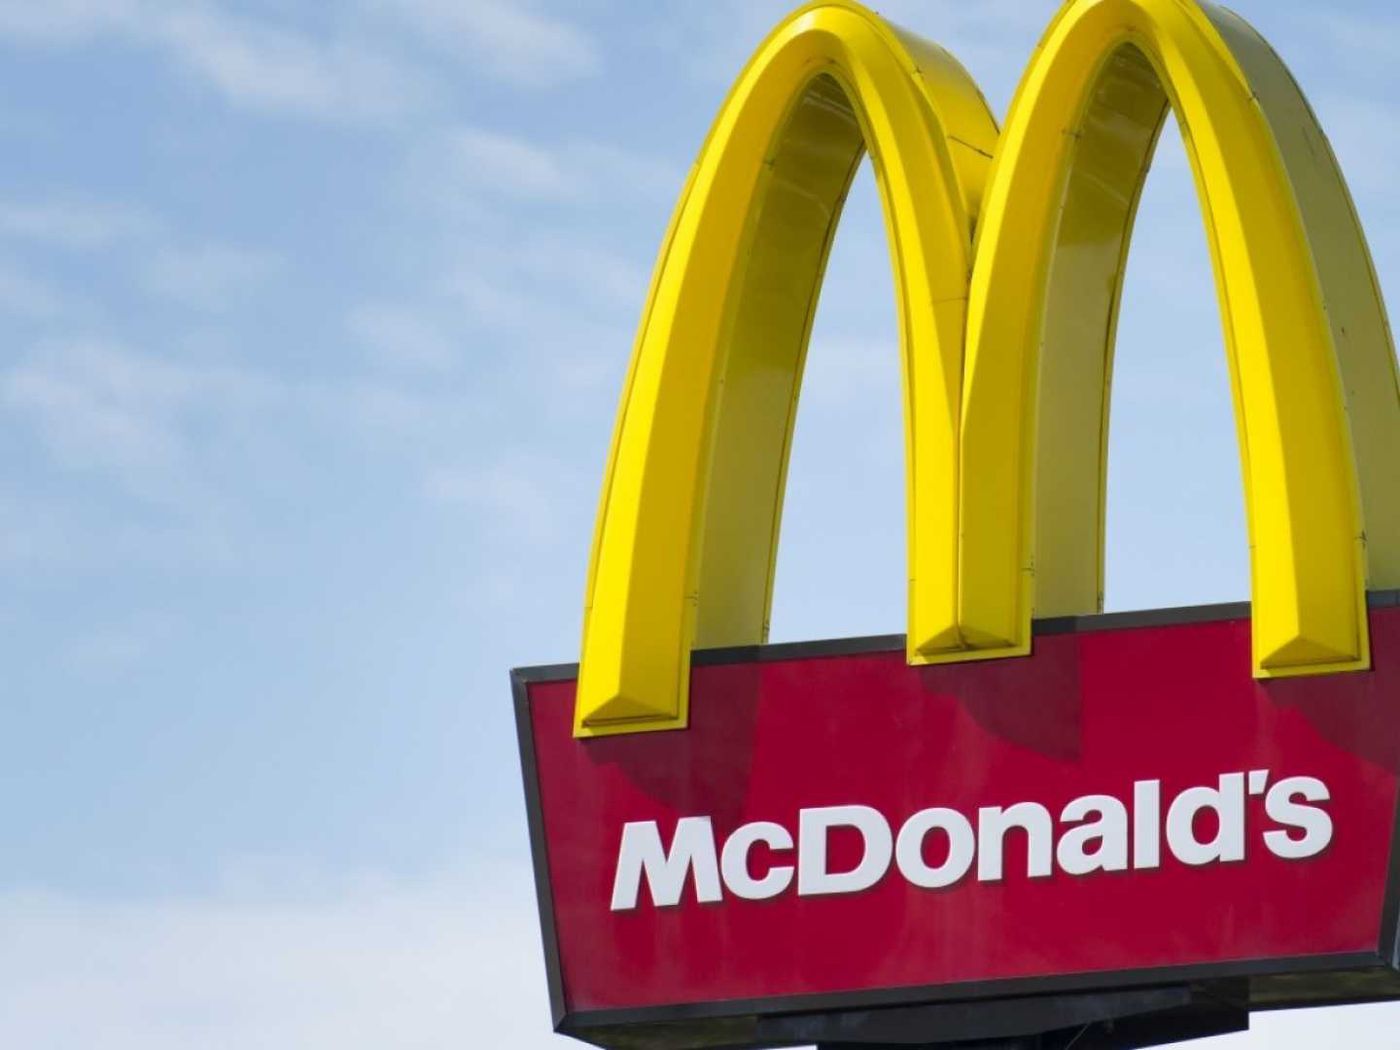 former Black franchisees sue McDonald's for racial discrimination